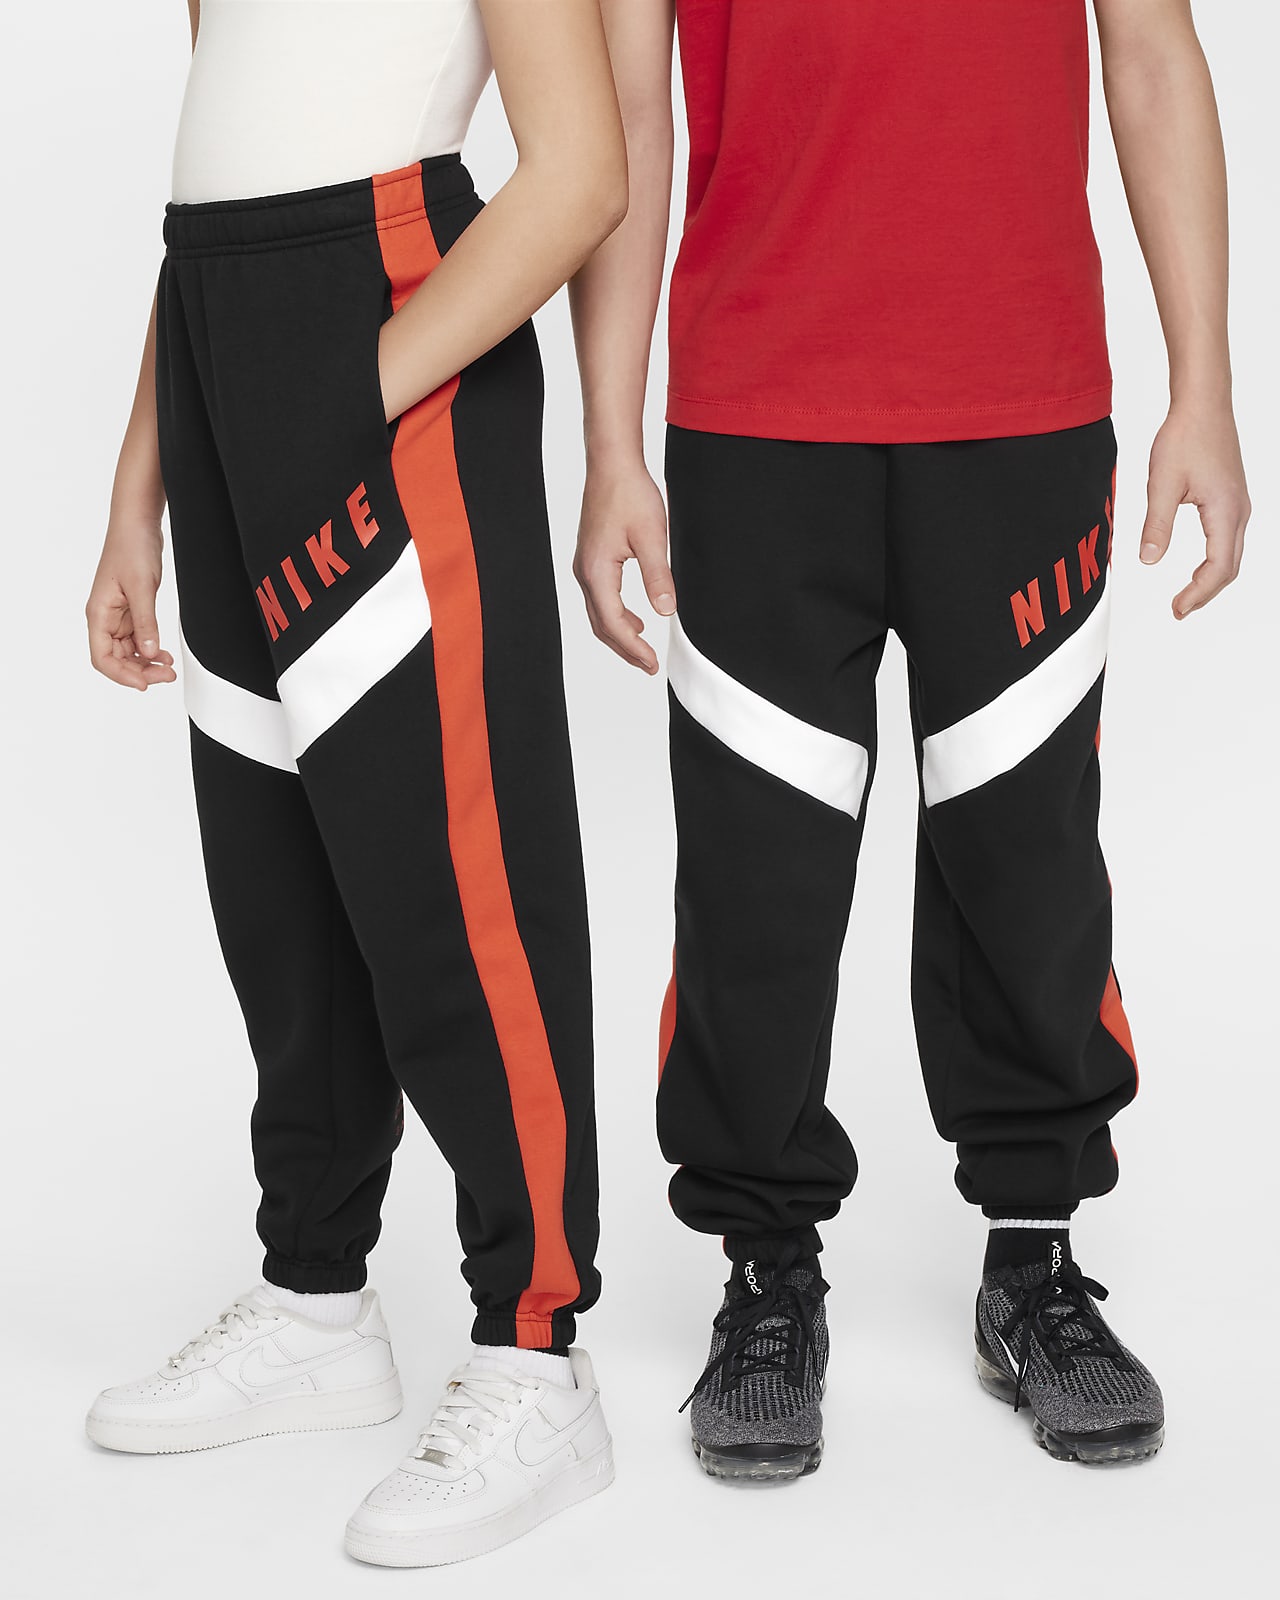 Fleecebyxor Nike Sportswear i oversize-modell för ungdom (tjejer)